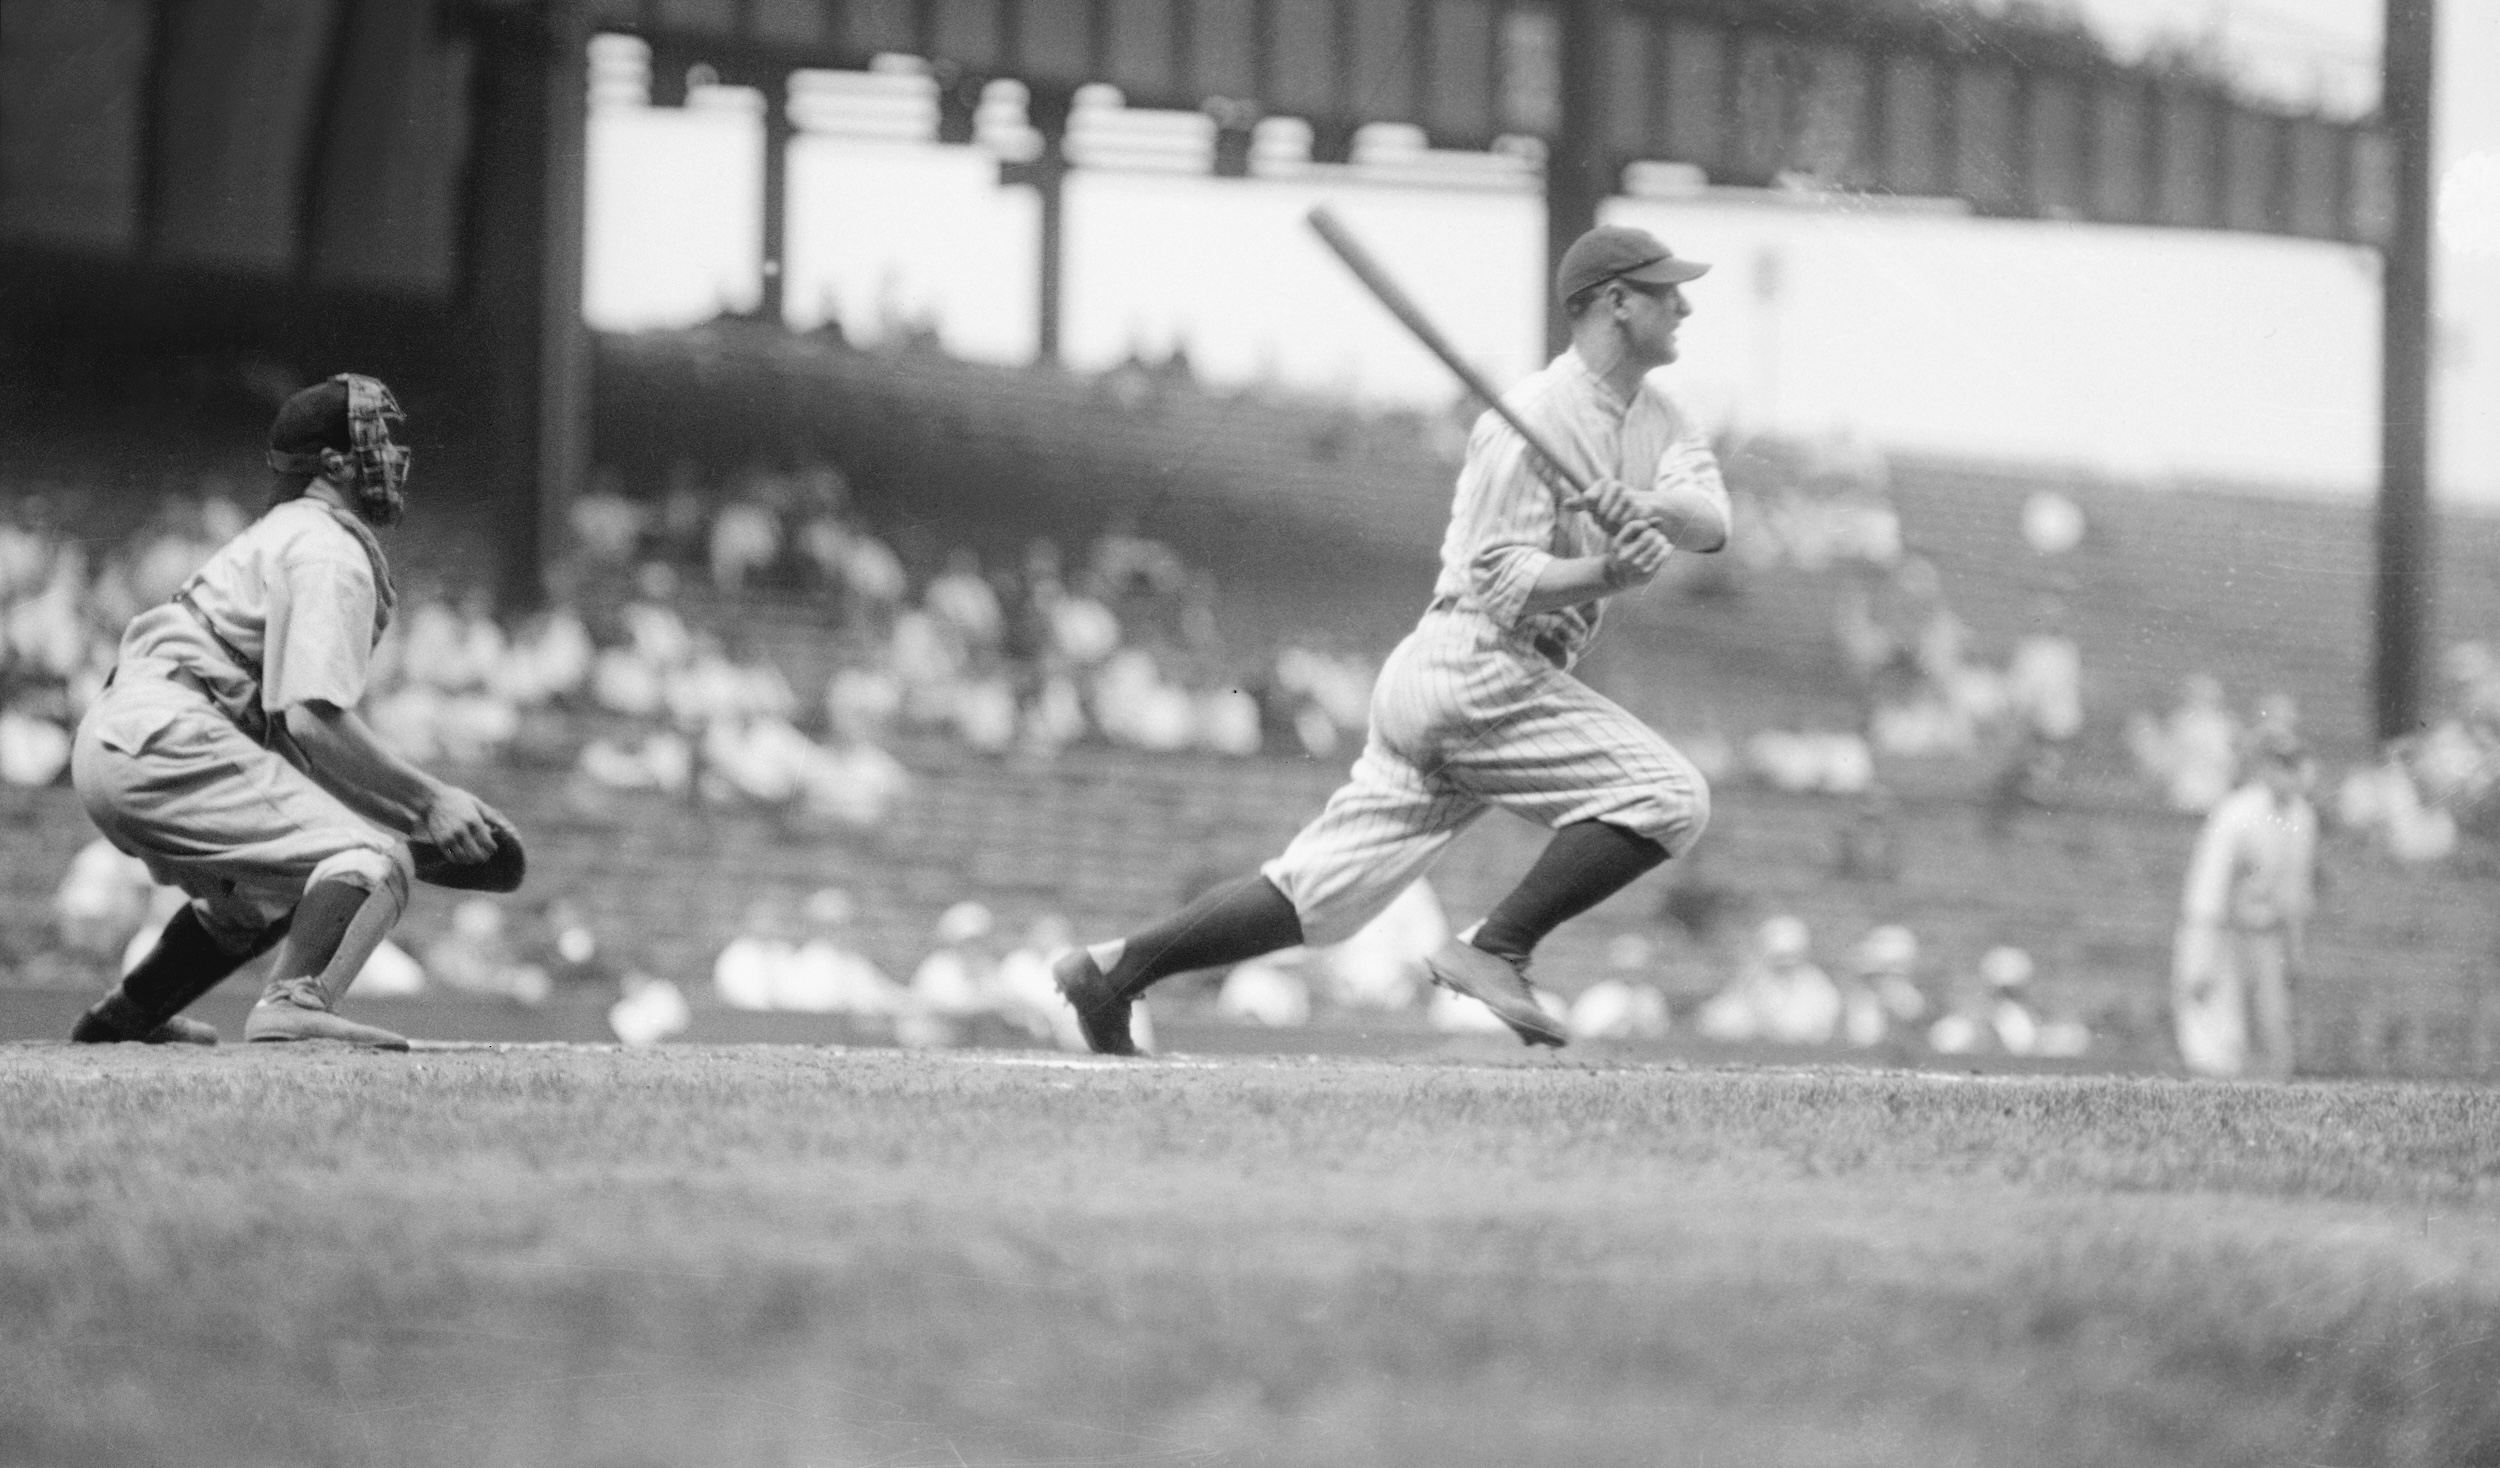 Lou Gehrig hits a home run.